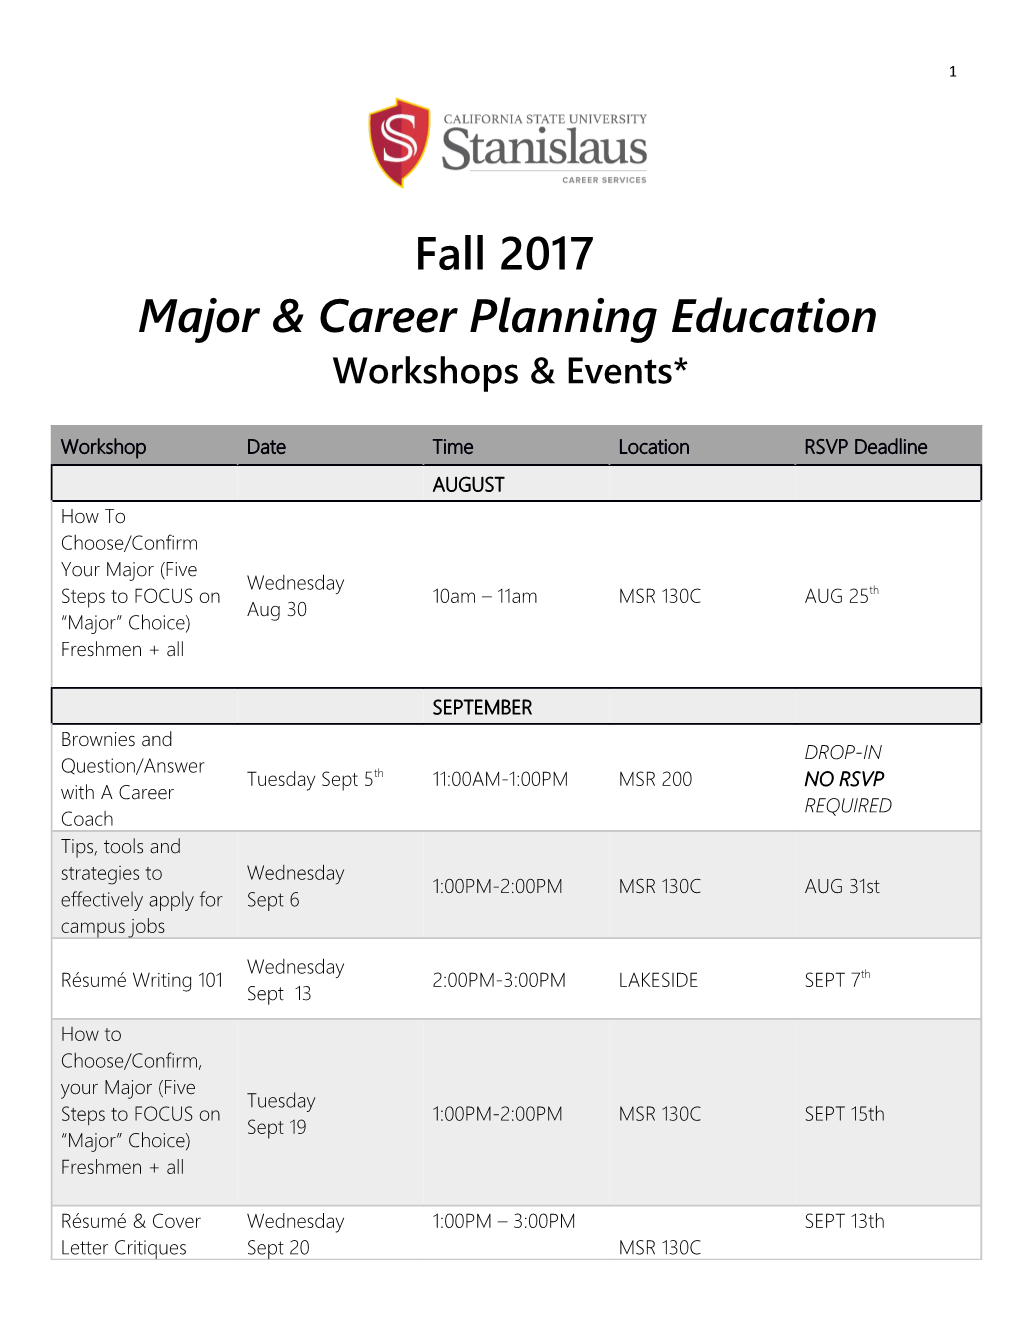 Major & Career Planning Education